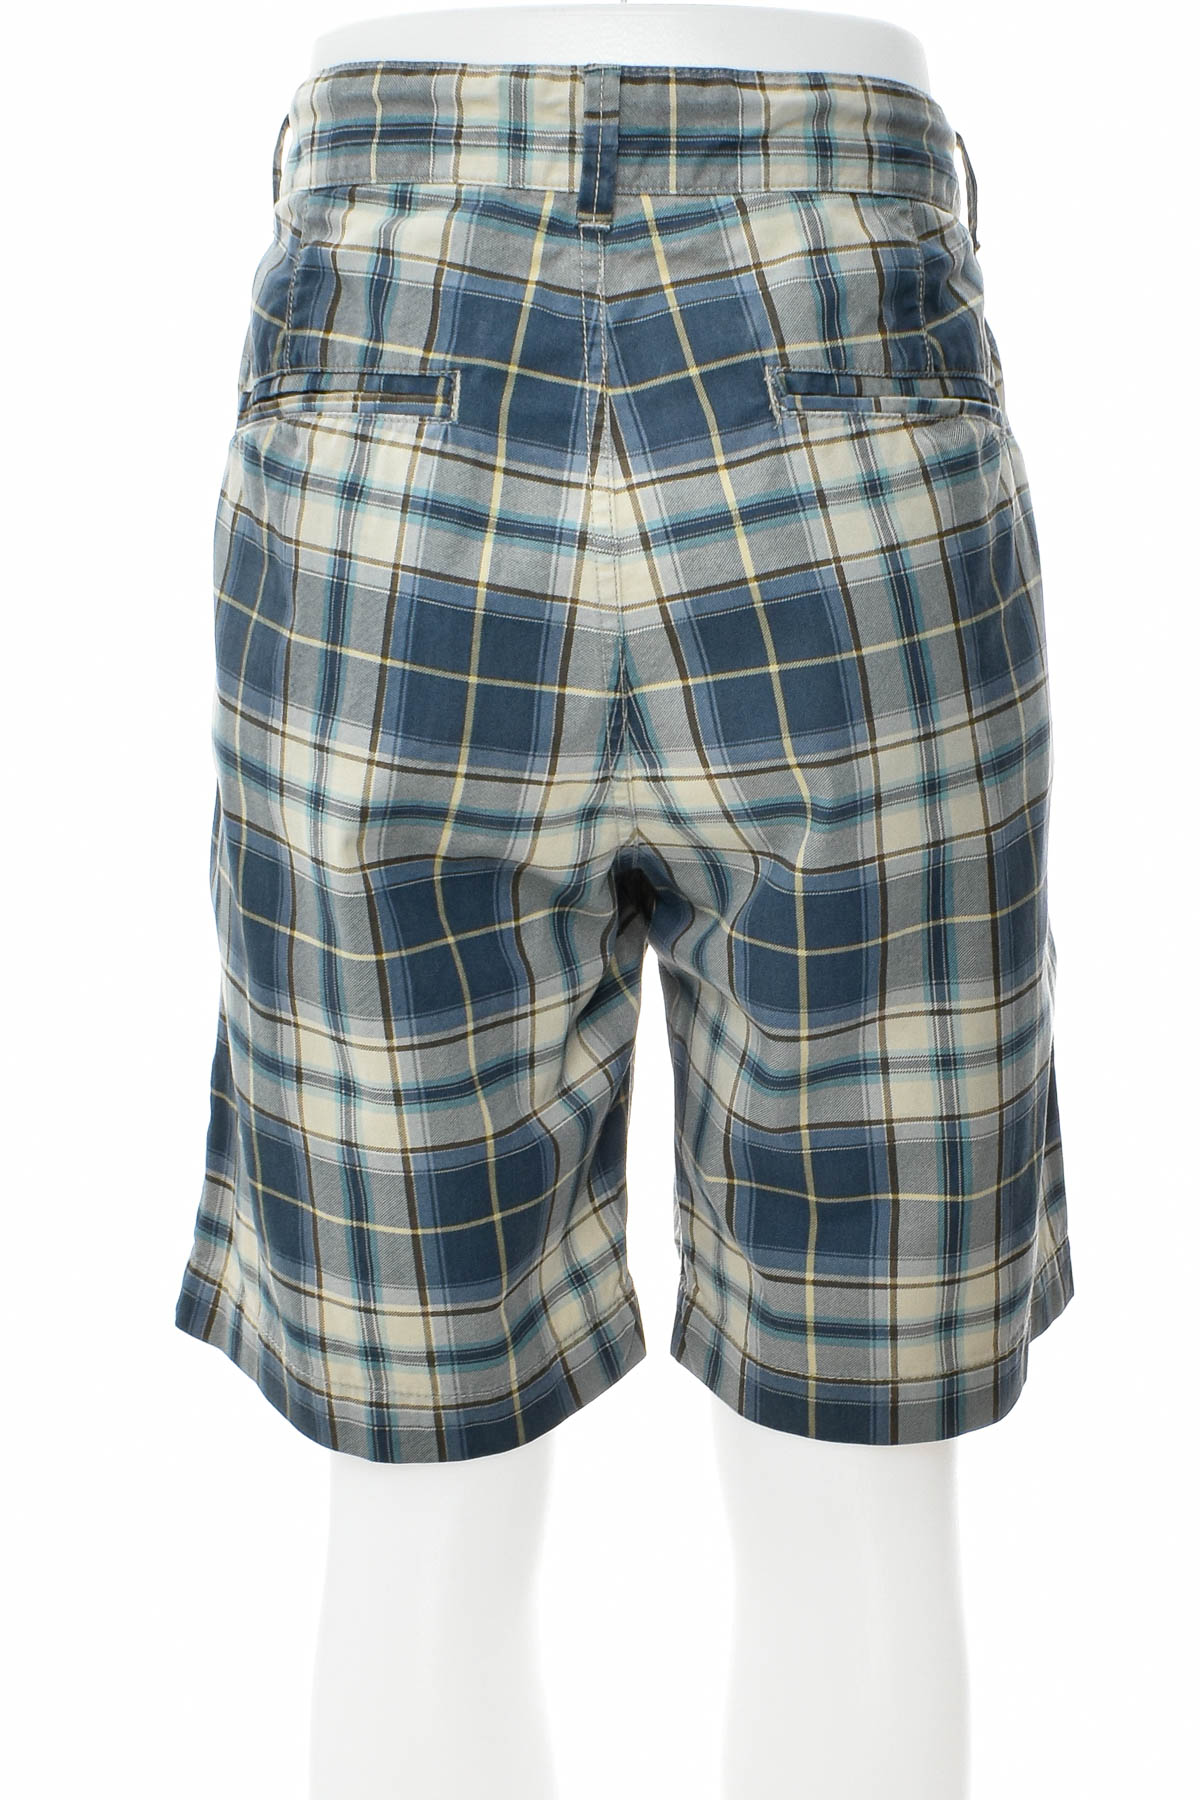 Men's shorts - SMOG - 1